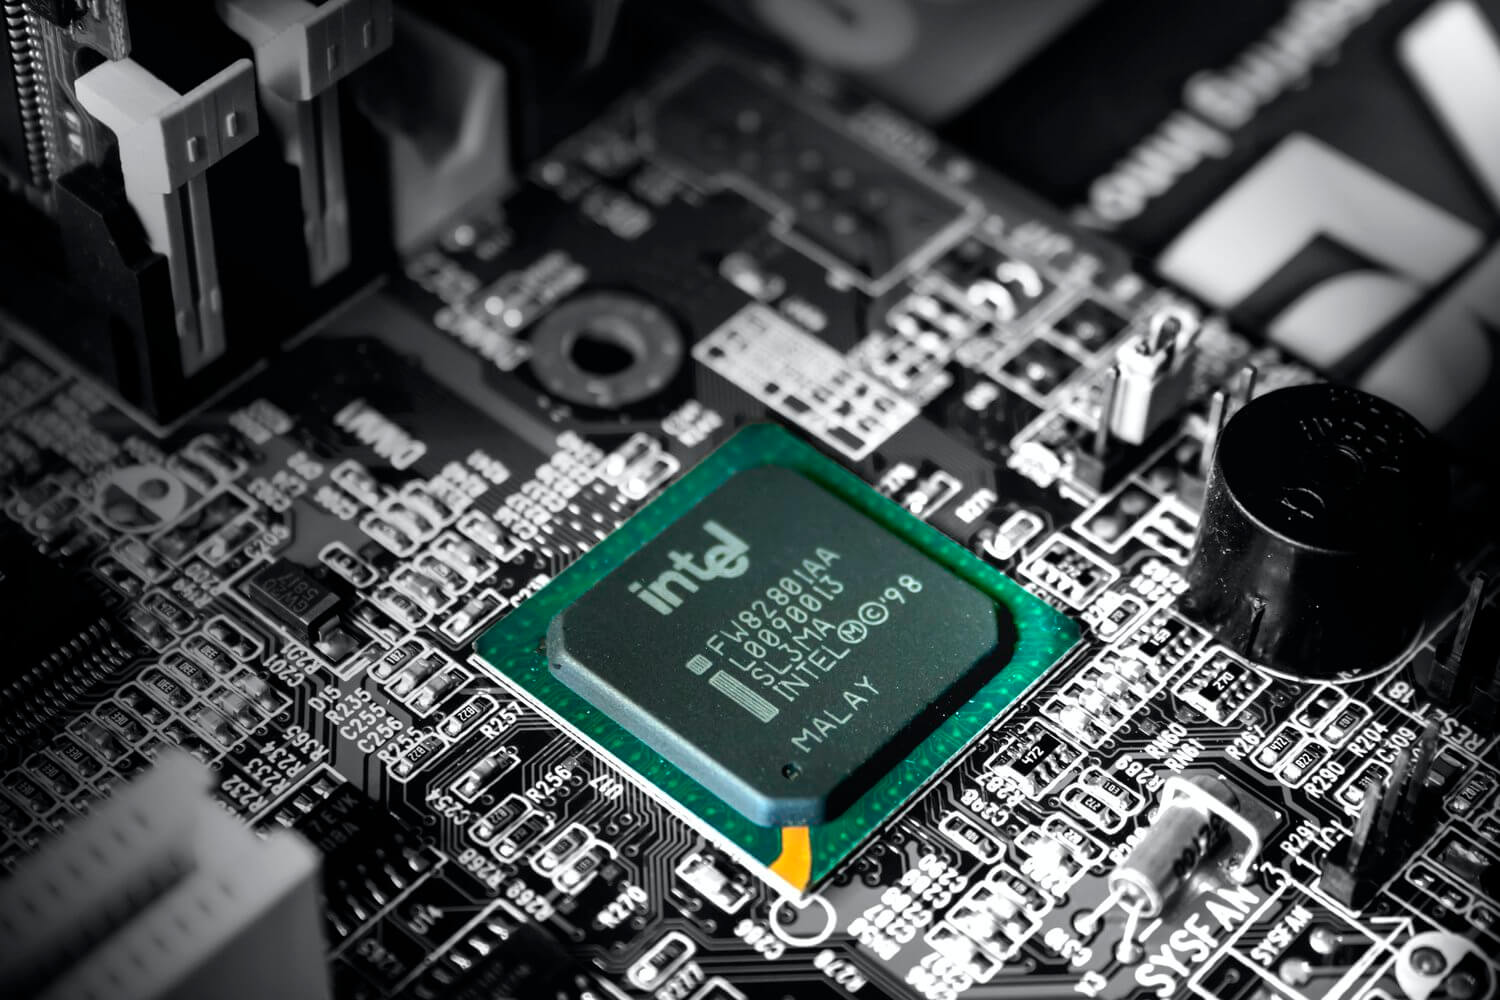 Stock image of Intel microchip